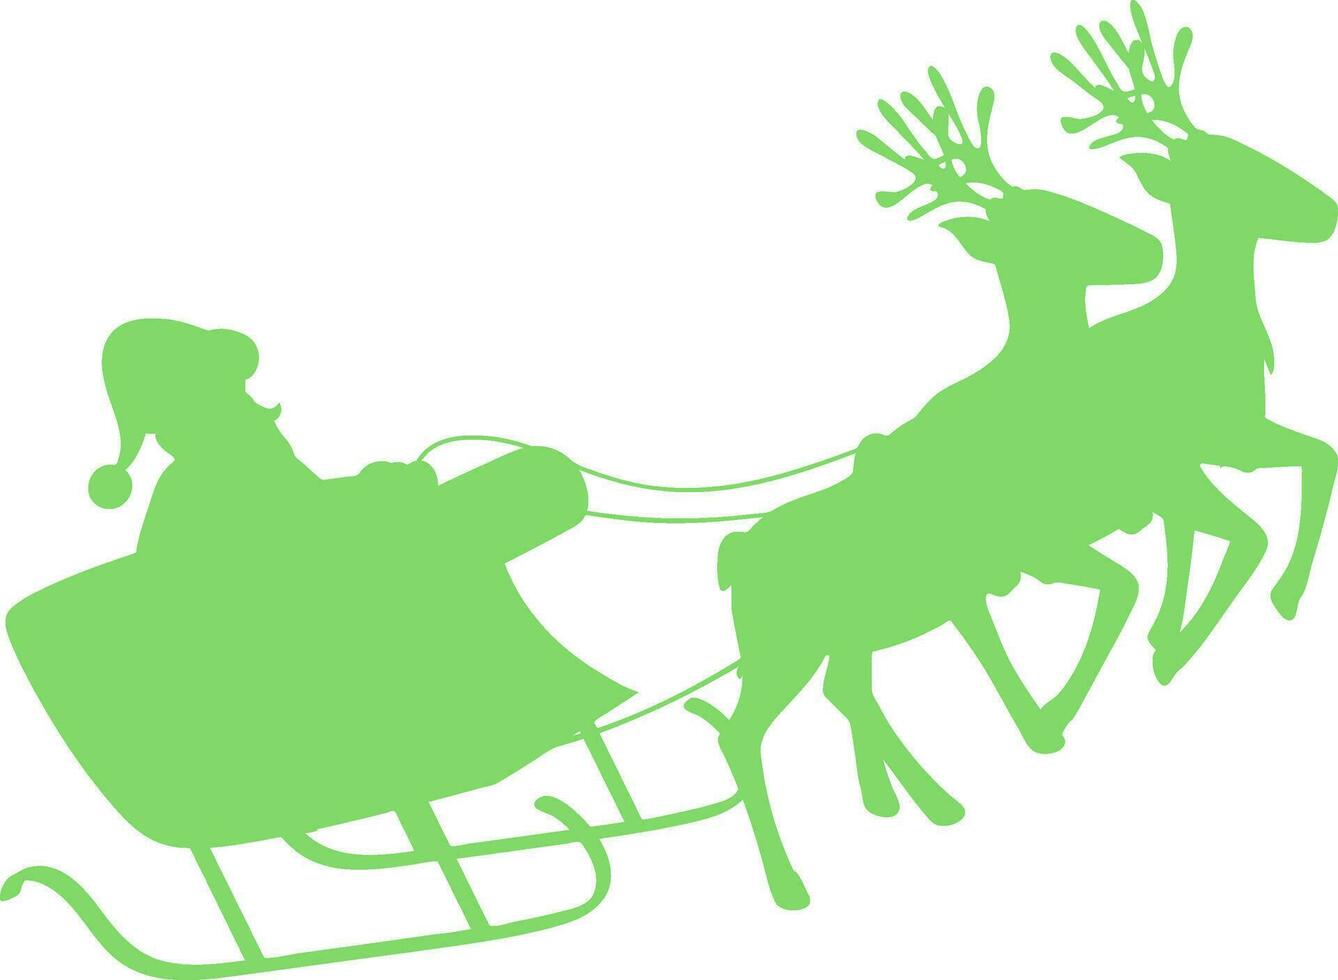 Green santa Claus with reindeer sleigh. vector